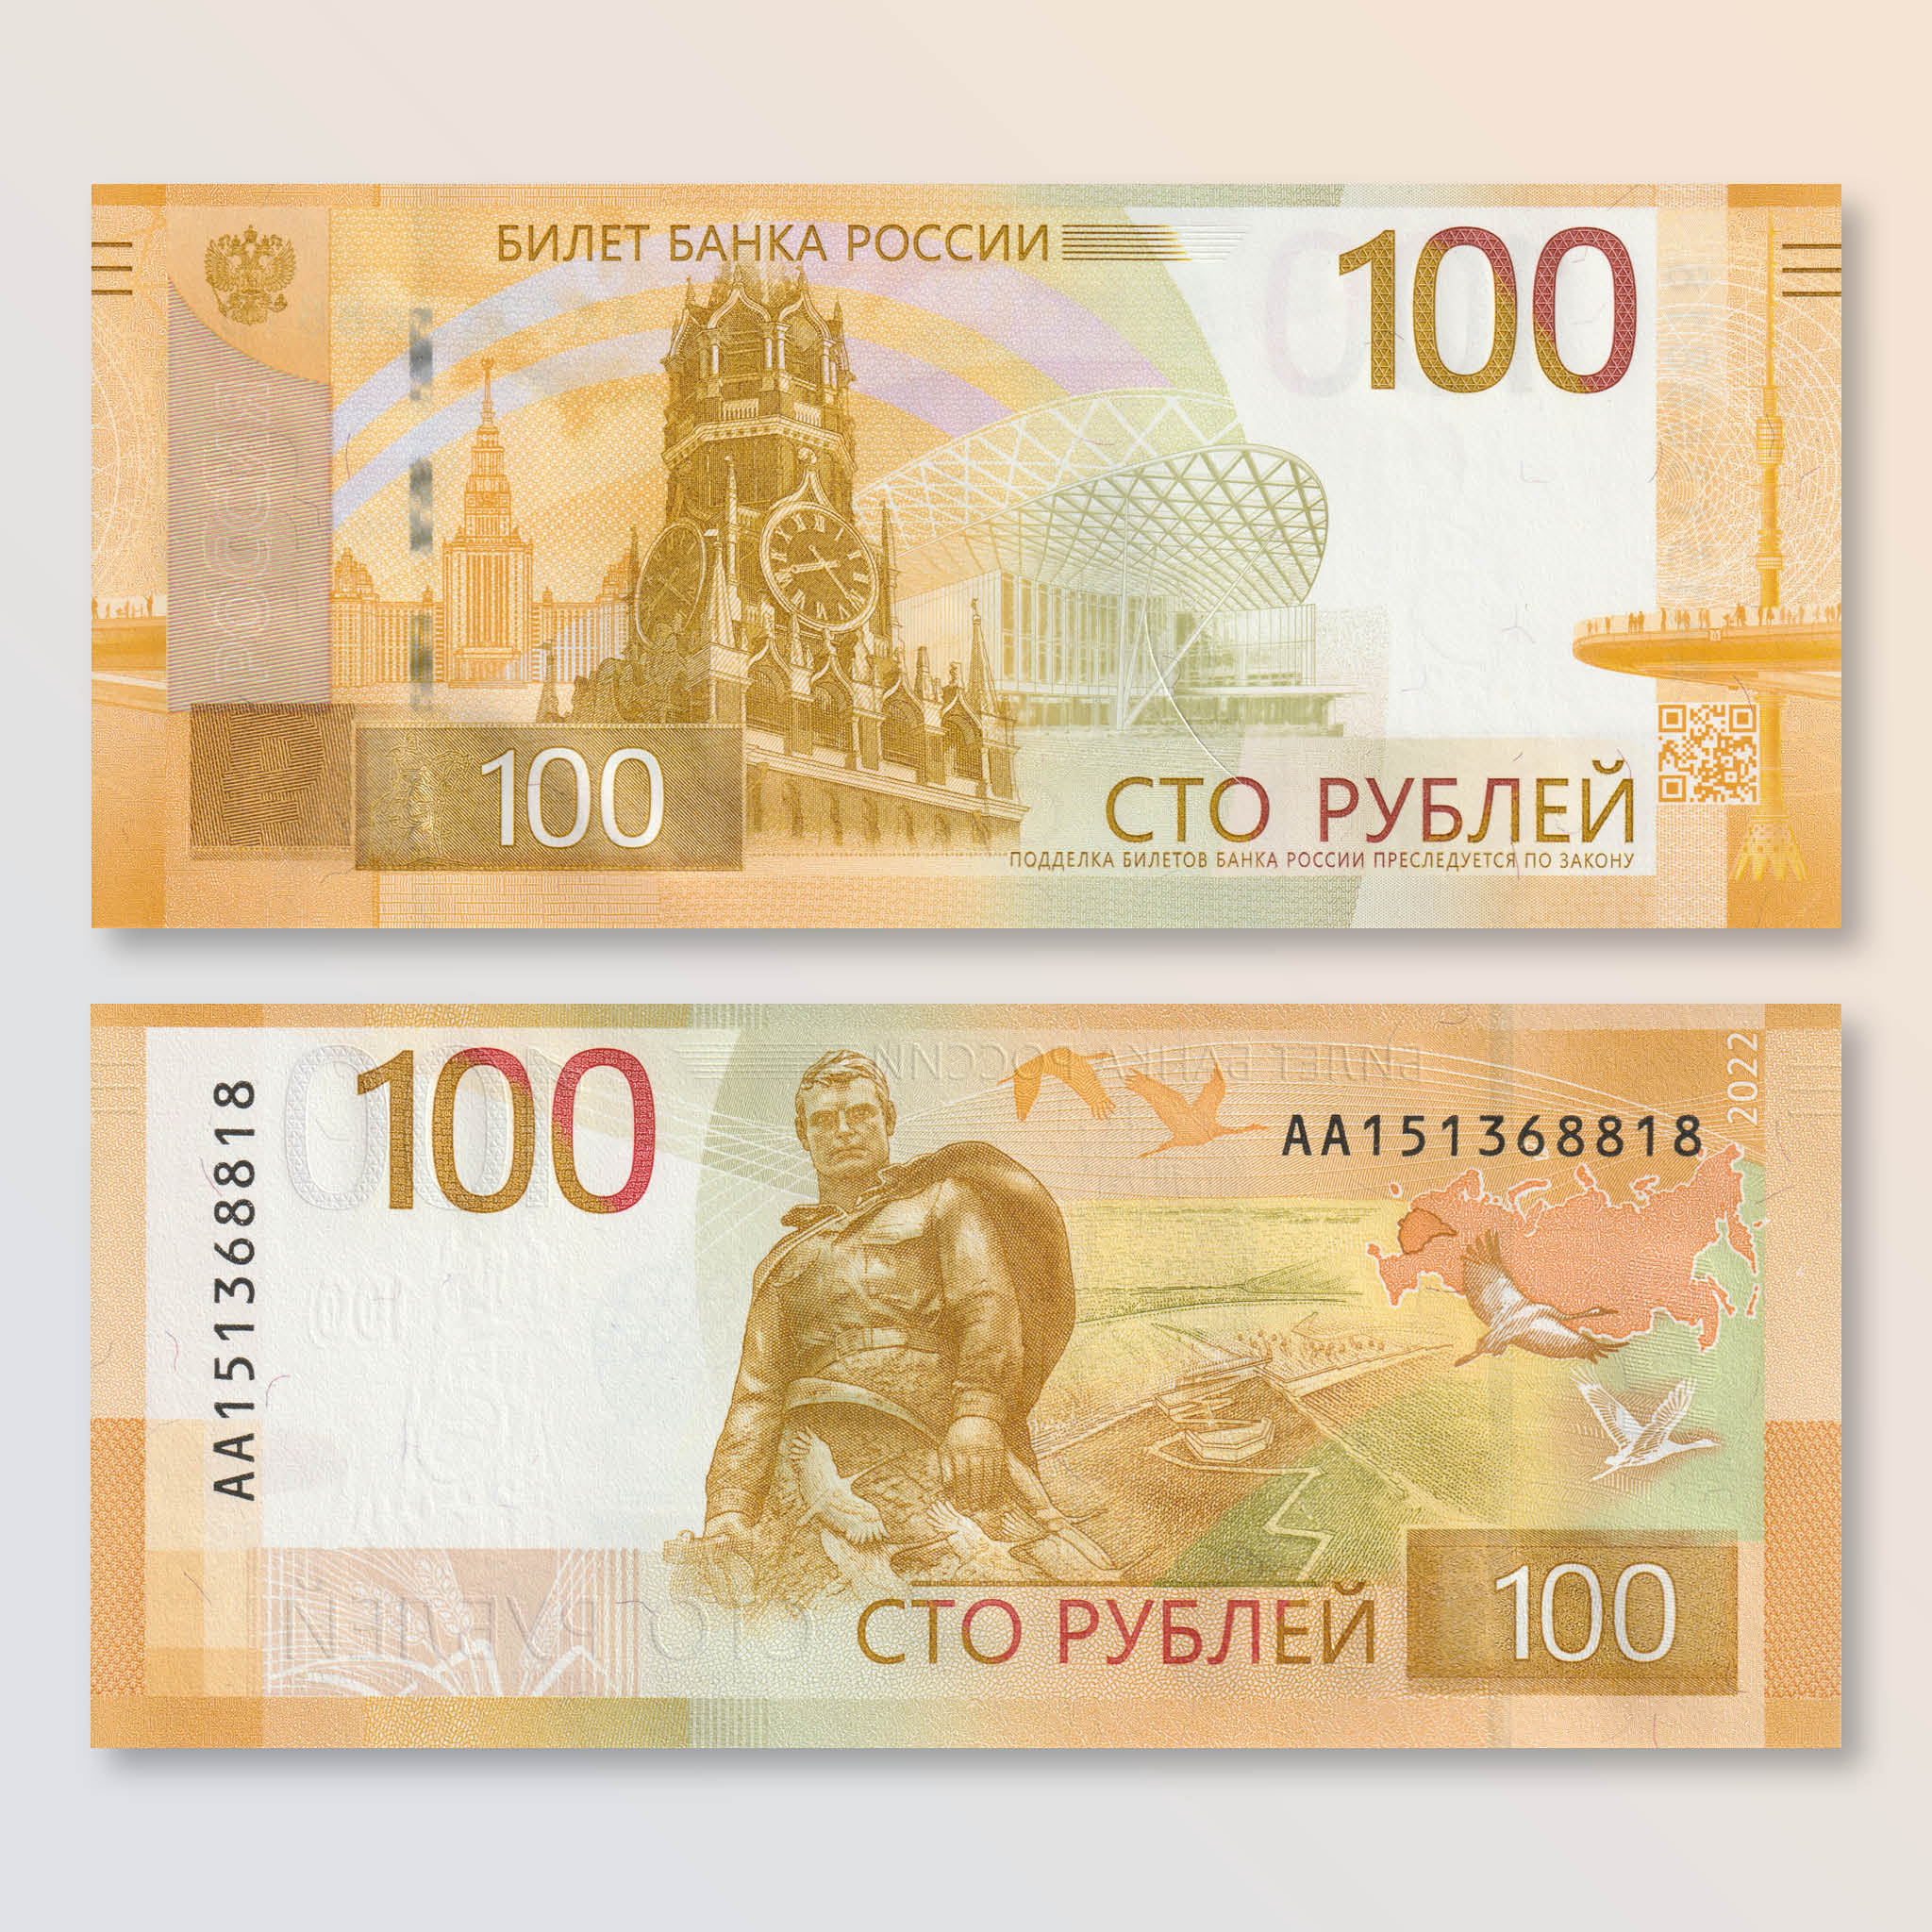 Russia 100 Rubles, 2022, B834a, UNC - Robert's World Money - World Banknotes